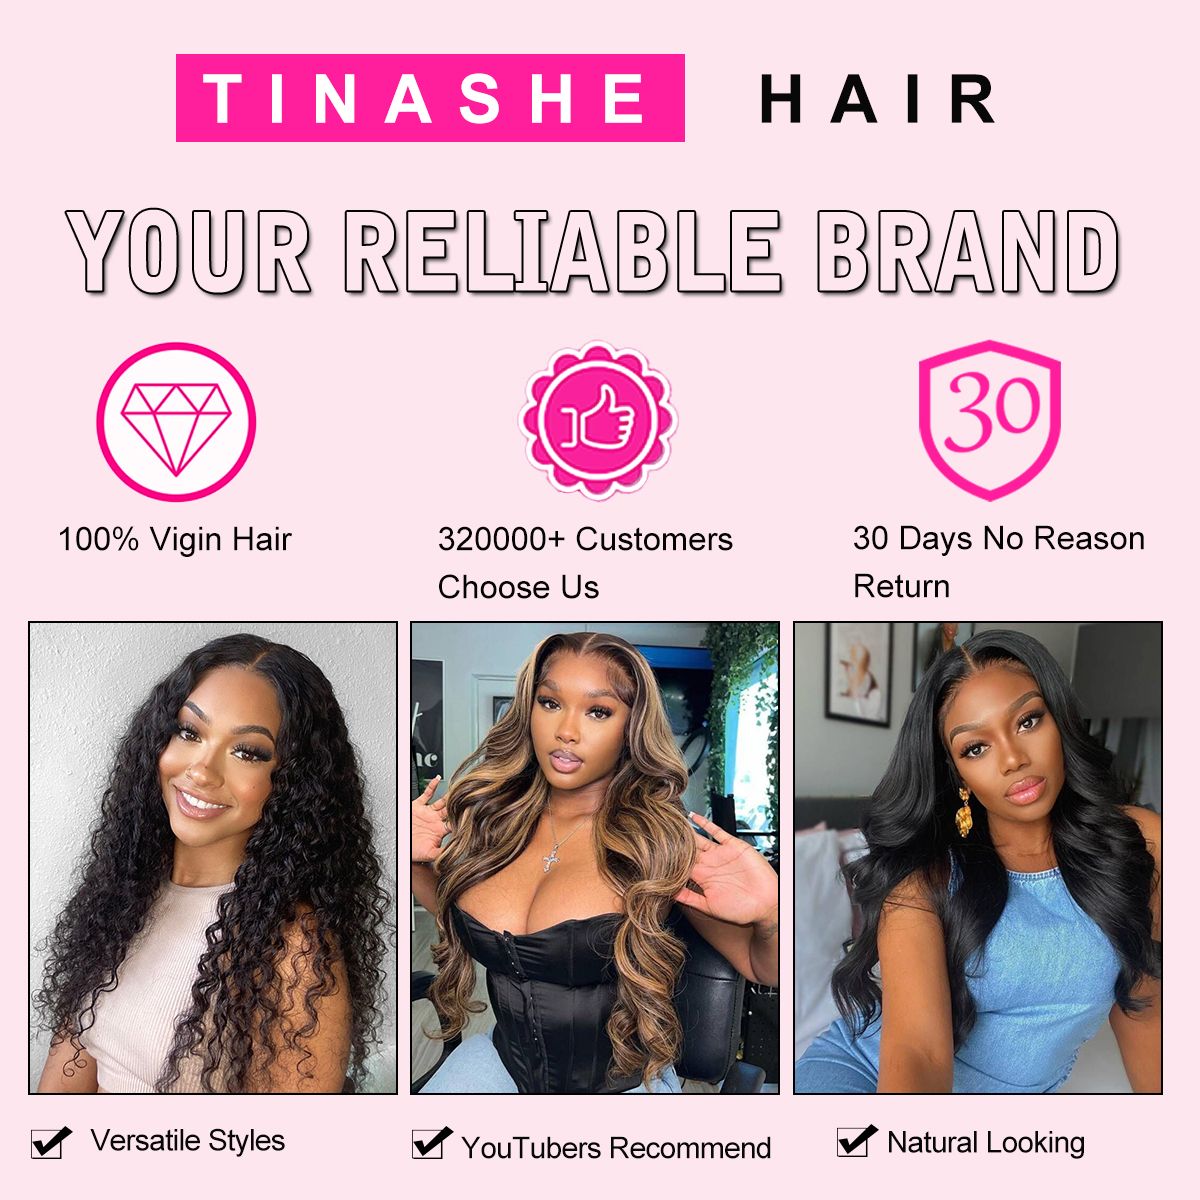 Why choose Tinashe Hair